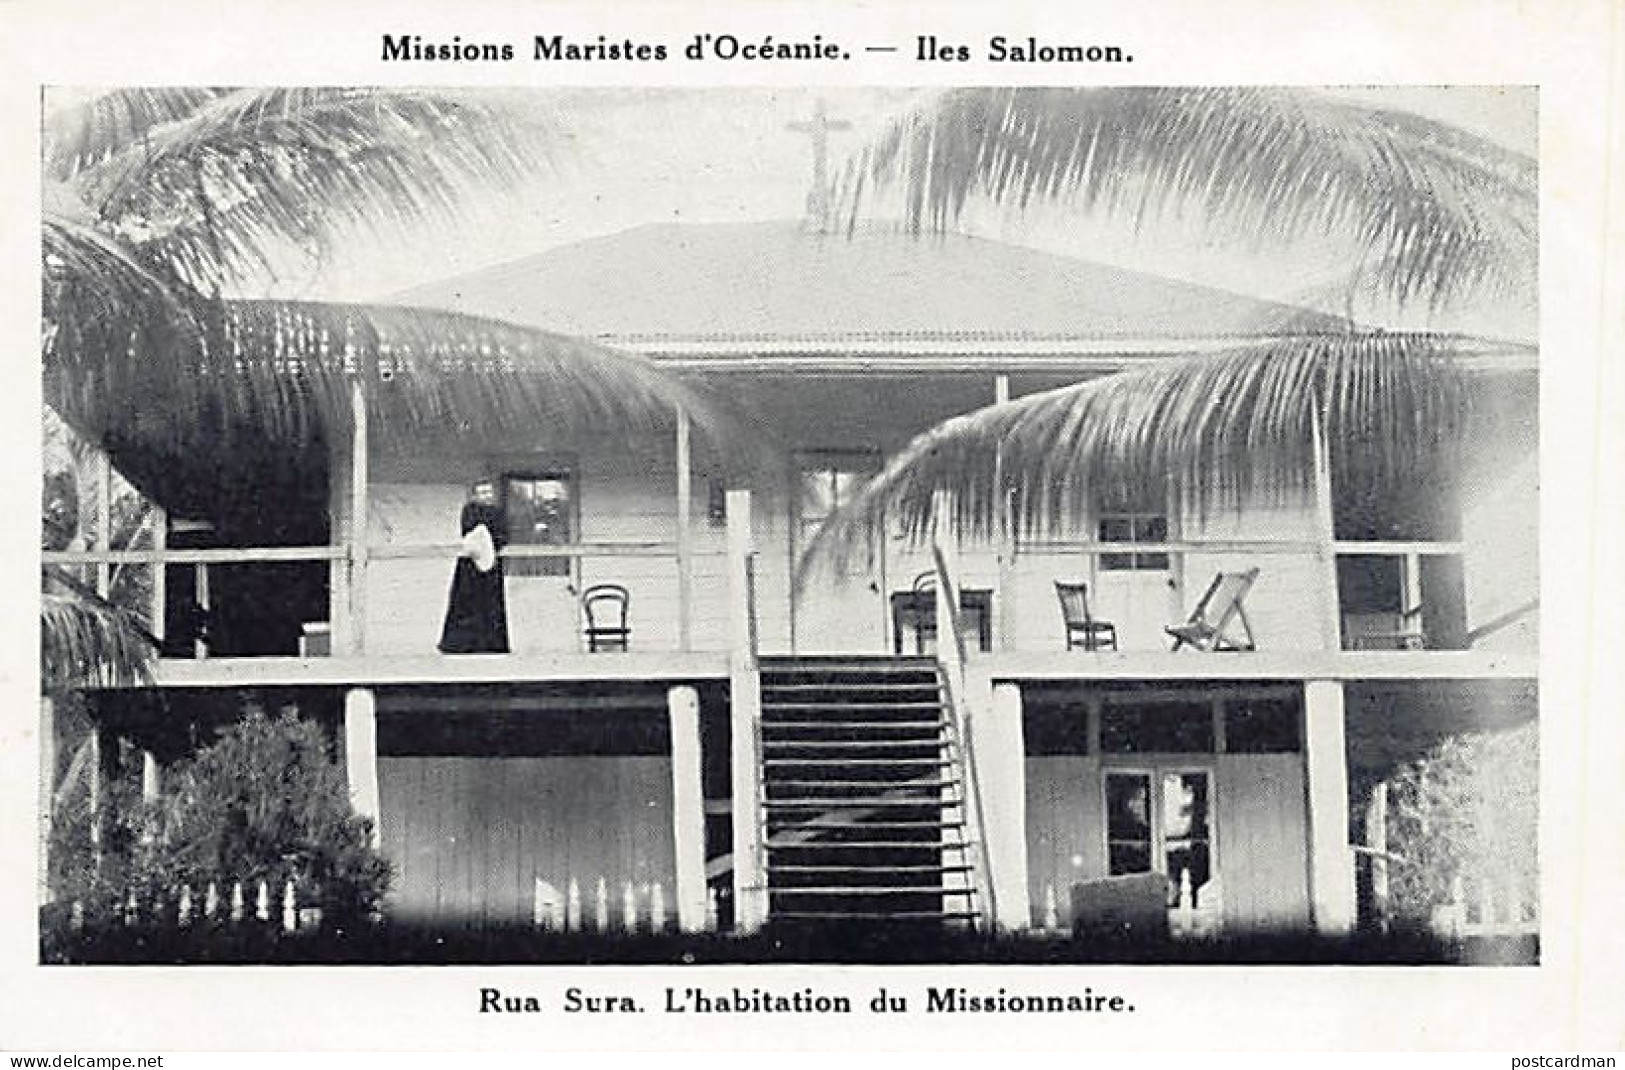 Solomon Islands - Rua Sura Island (off Aola Bay, Guadalcanal) - The Missionary's Dwelling - Publ. Missions Maristes D'Oc - Isole Salomon